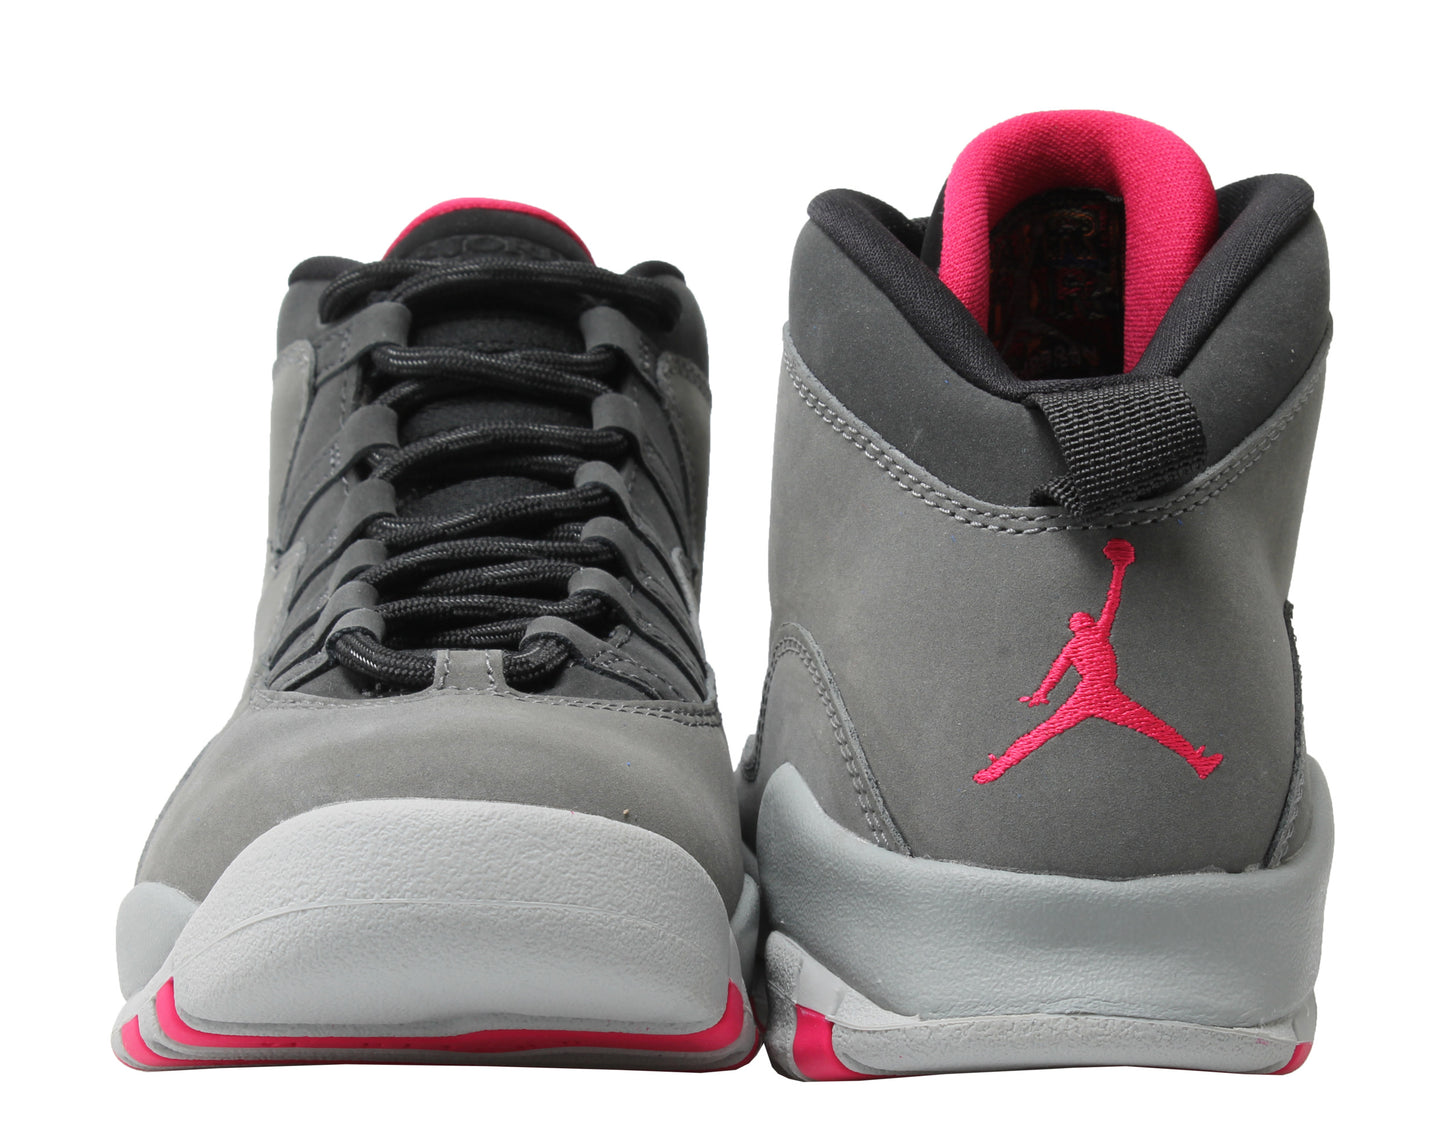 Nike Air Jordan 10 Retro (GS) Dark Shadow Grey Girls Basketball Shoes 487211-006